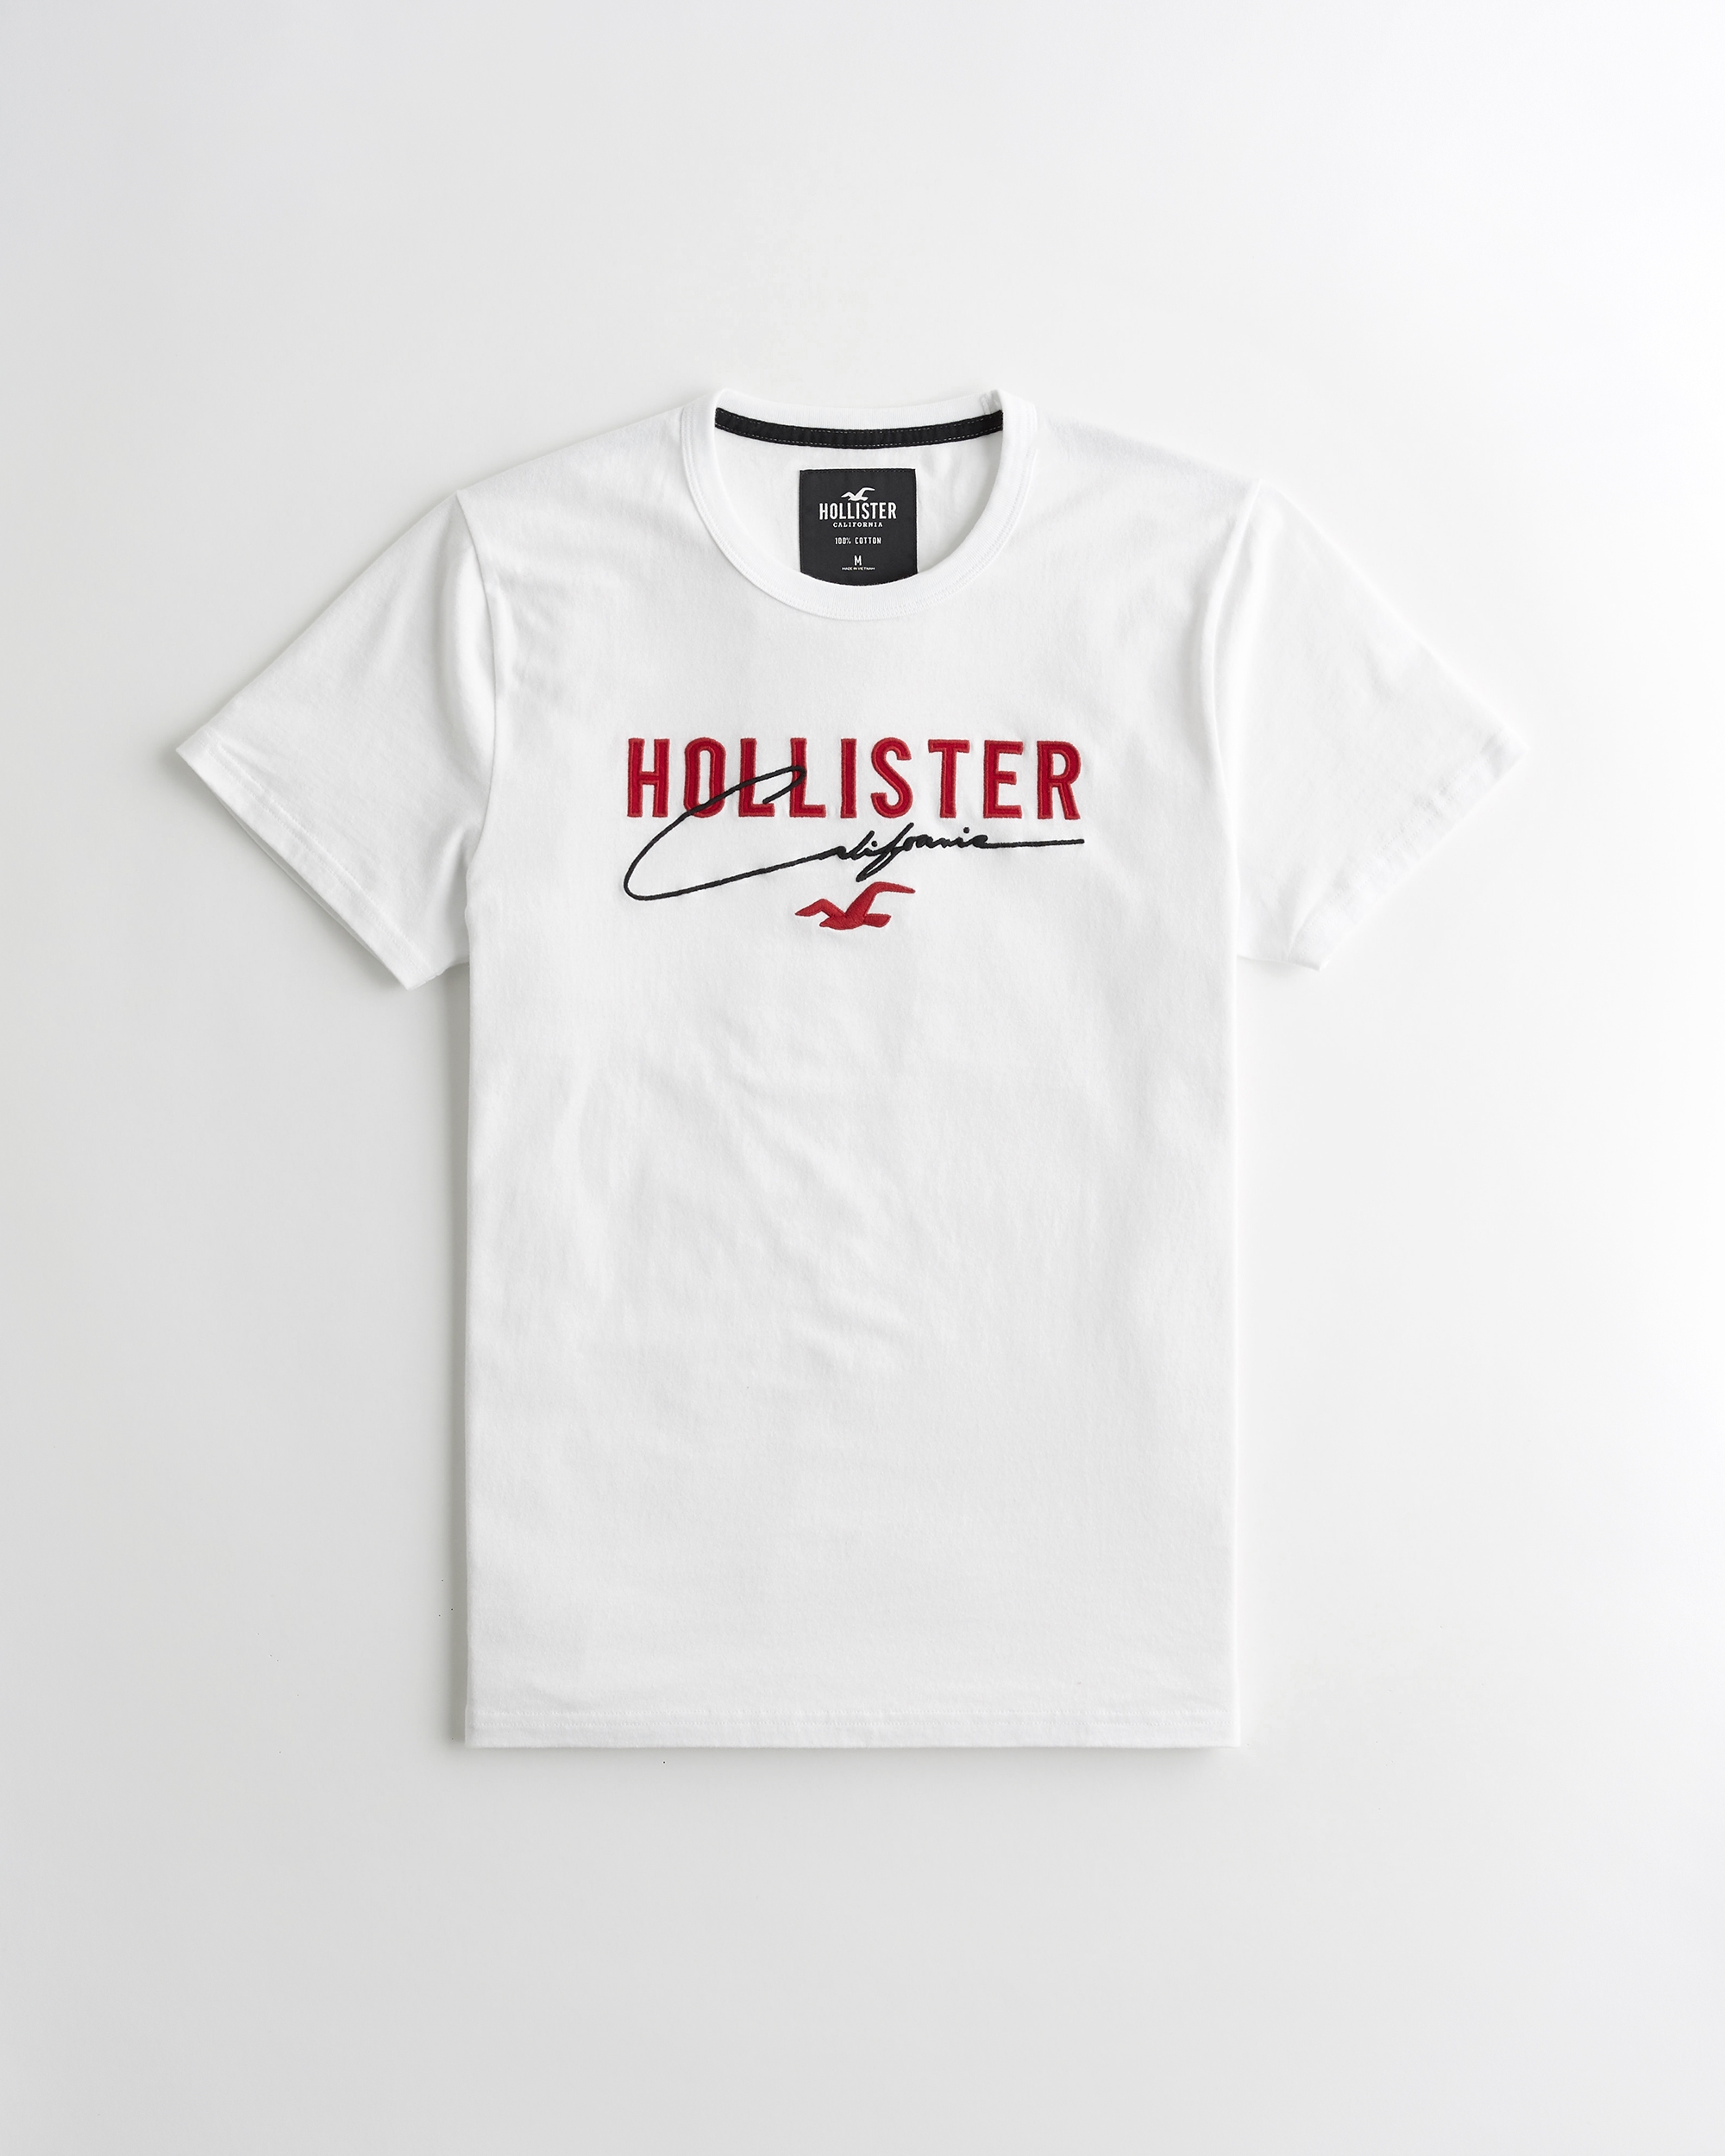 buy hollister t shirts online